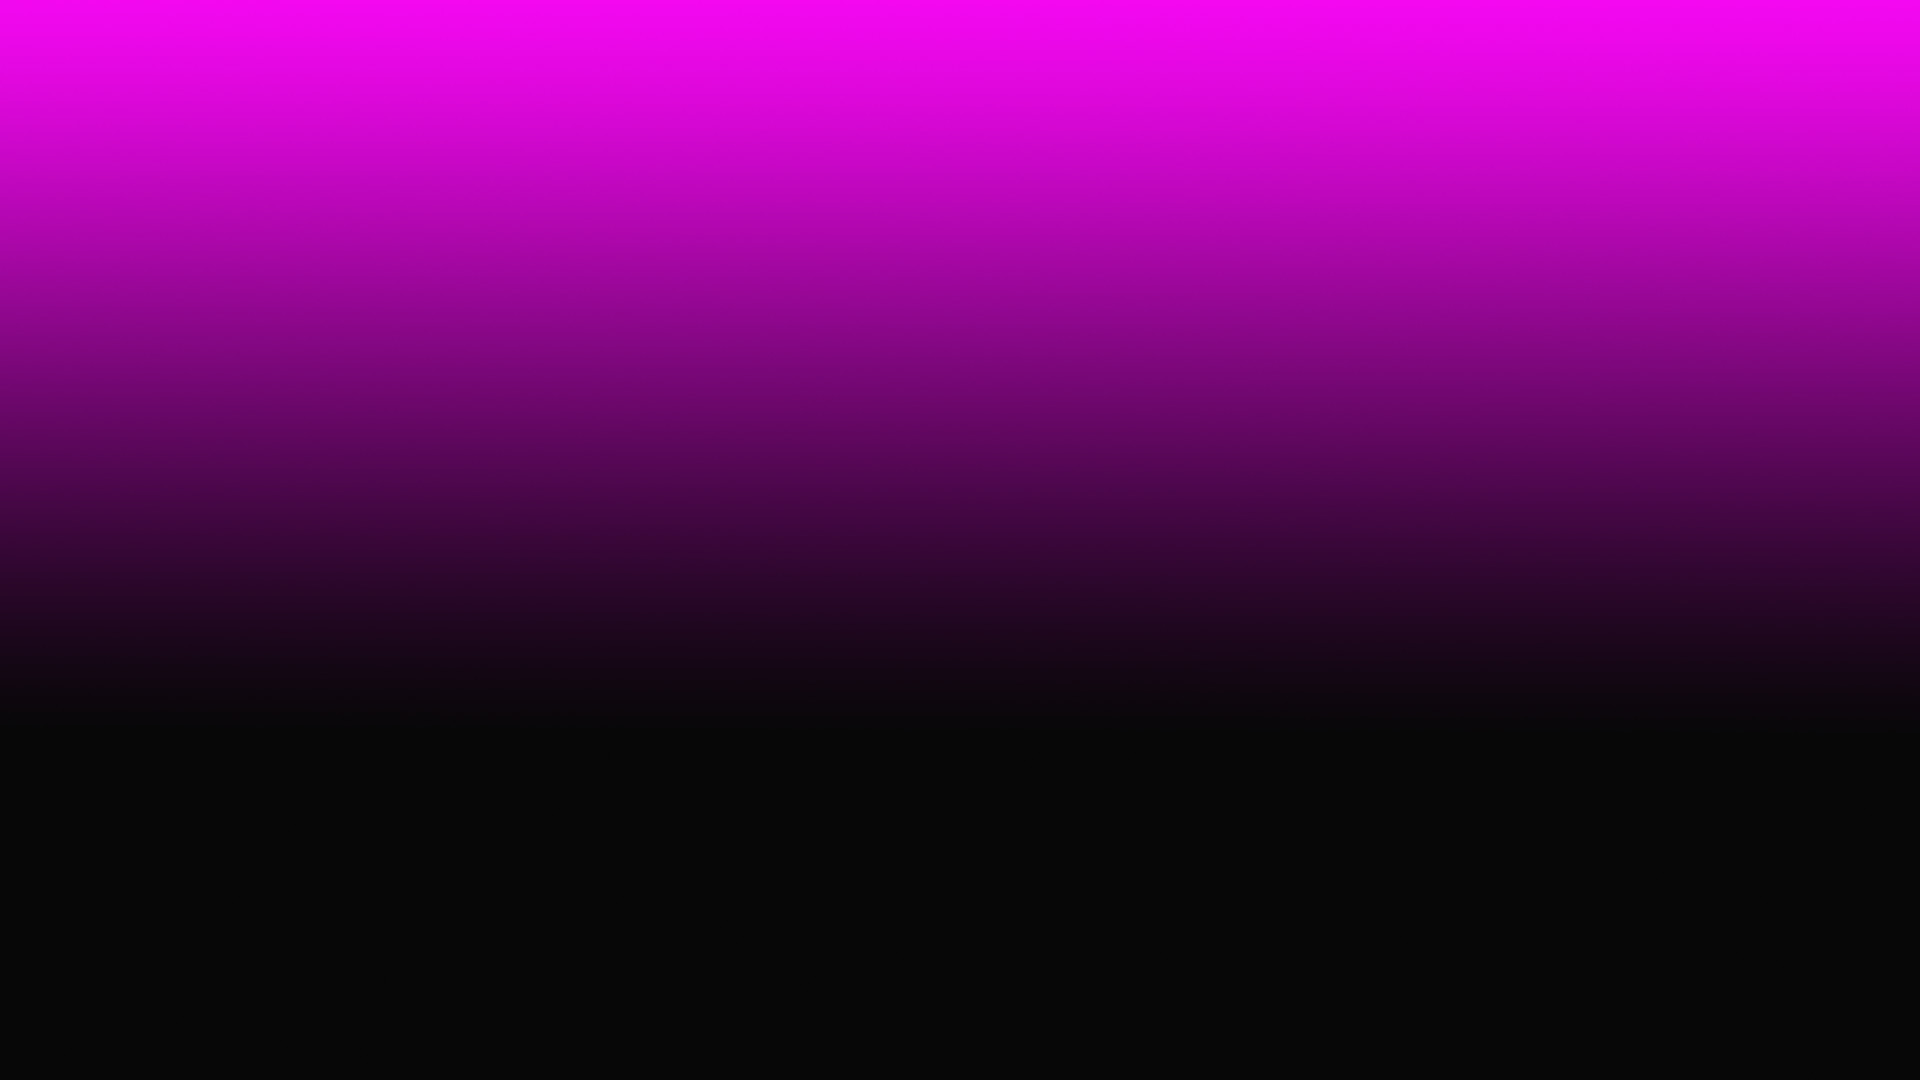 1920x1080  Pink And Black Backgrounds For Desktop - Wallpaper Cave